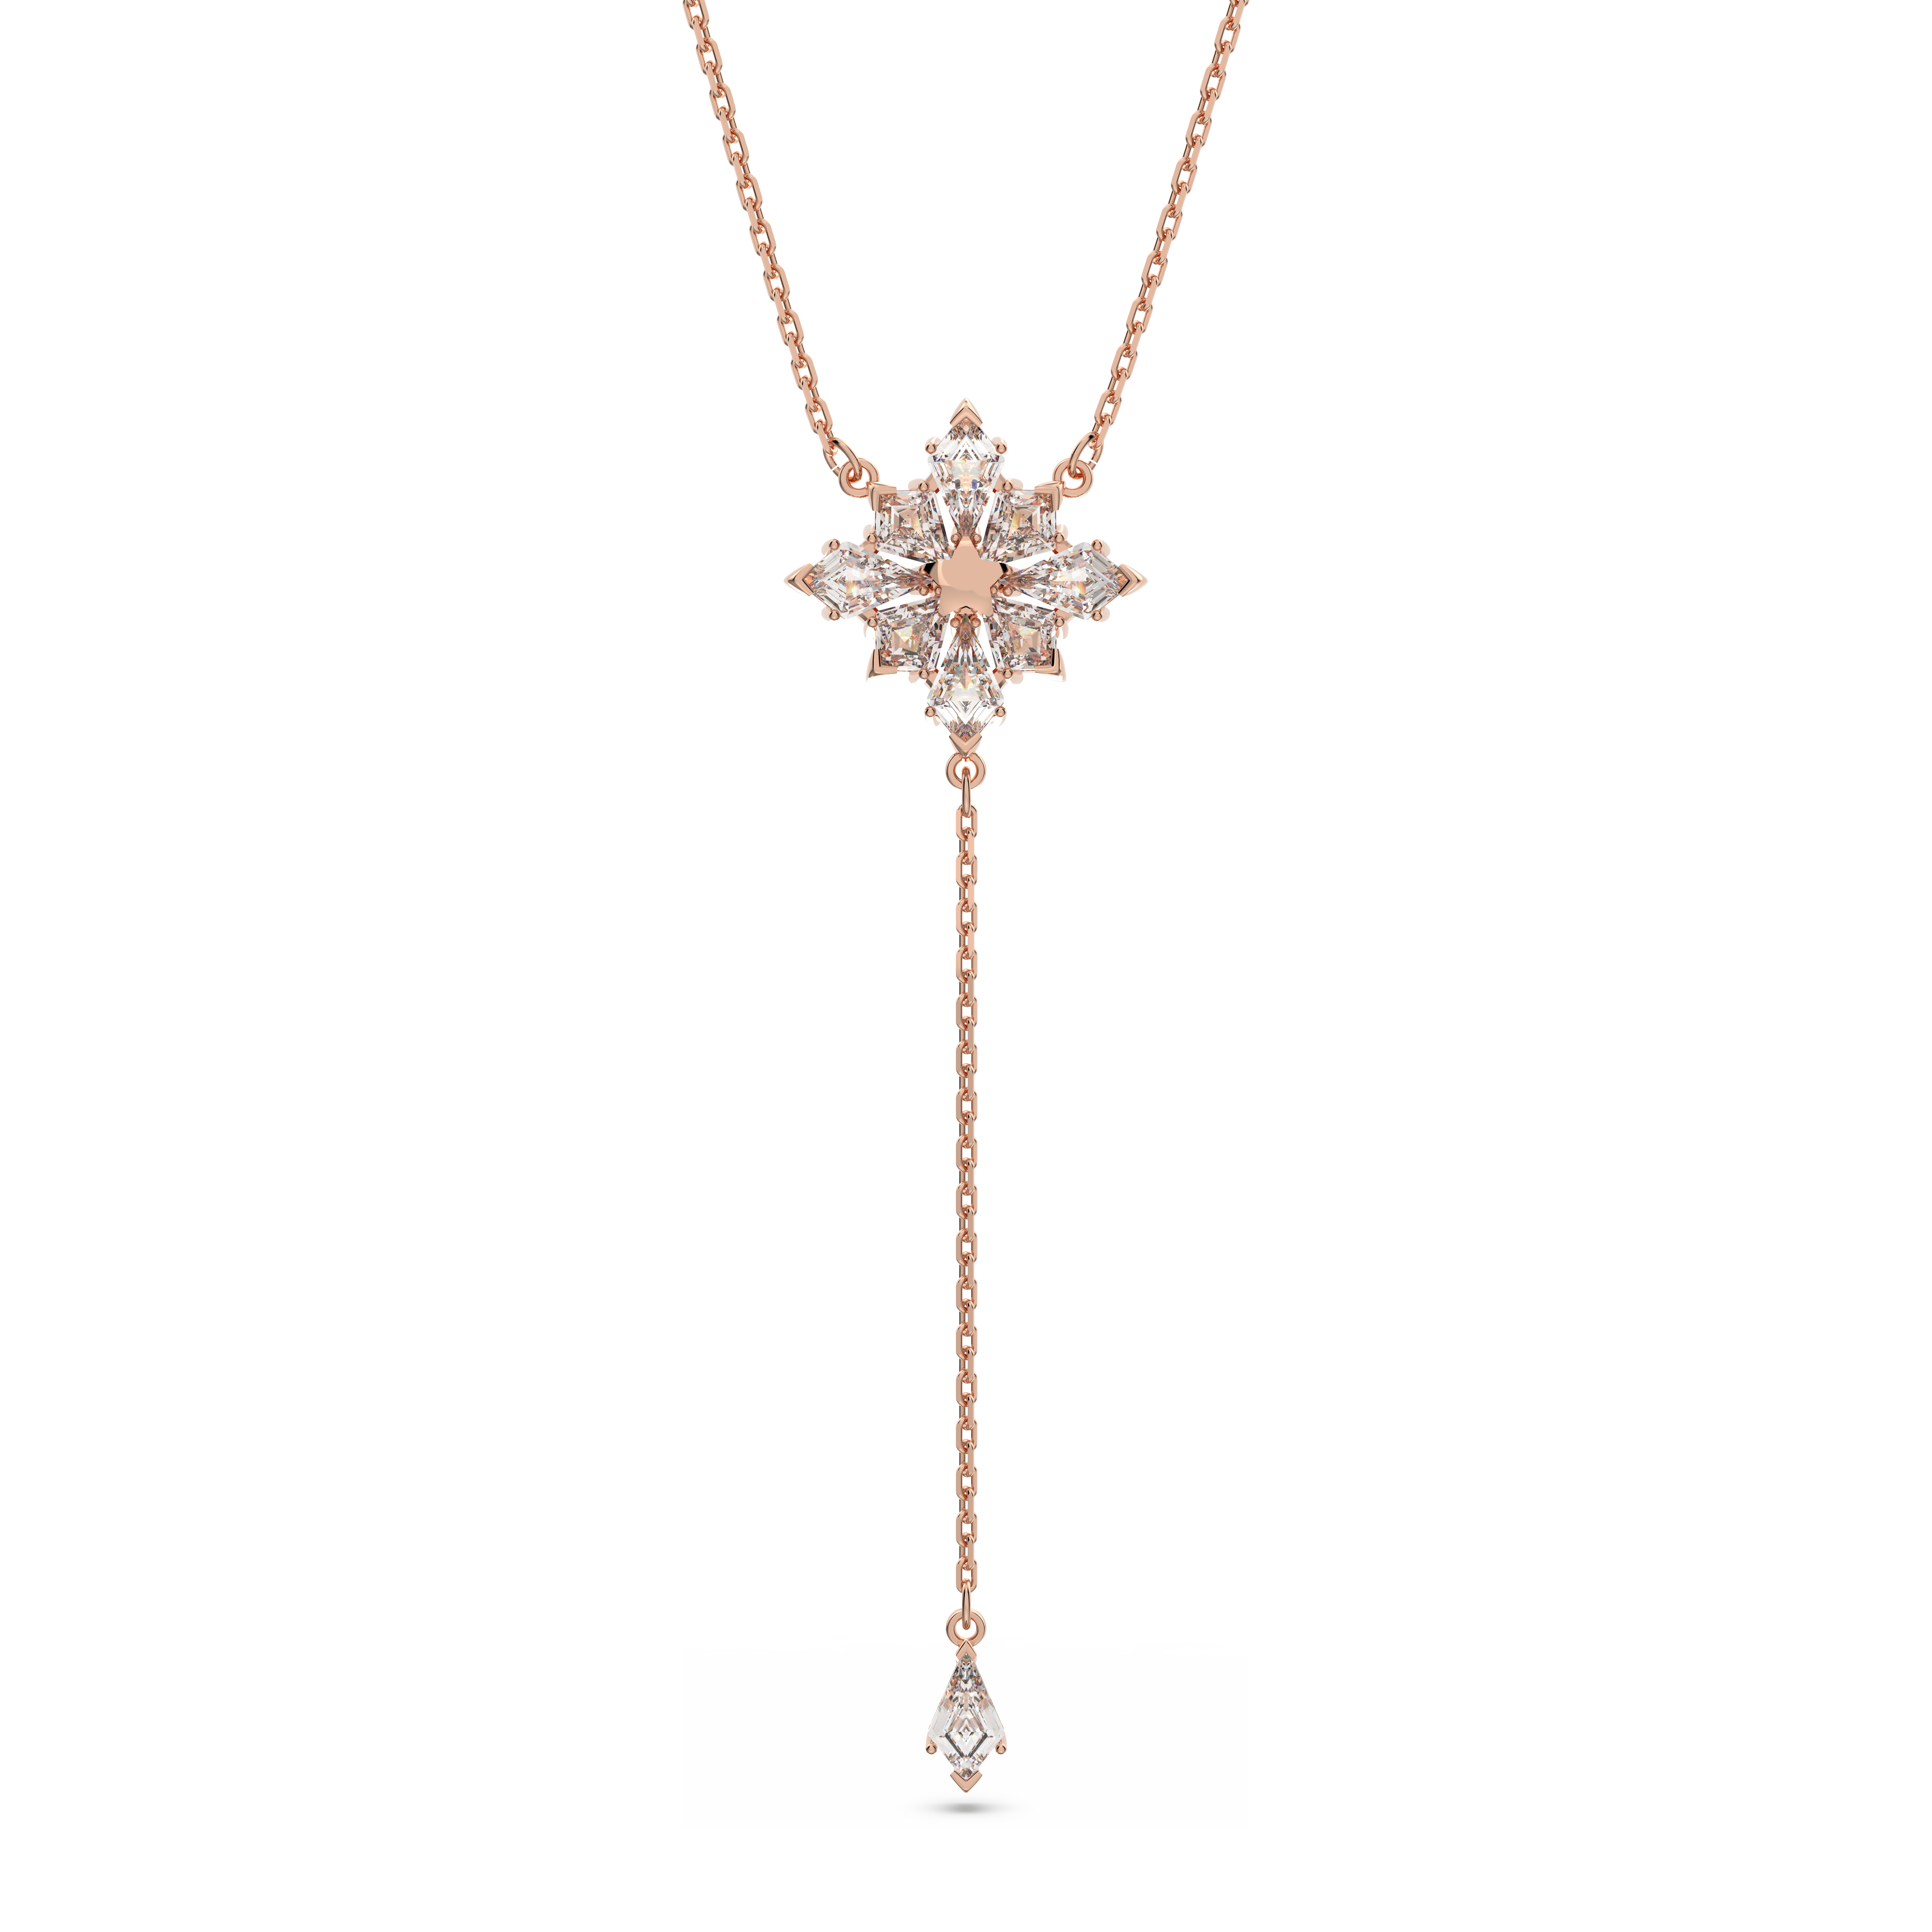 Stella Y necklace, Kite cut, Star, White, Rose gold-tone plated by SWAROVSKI